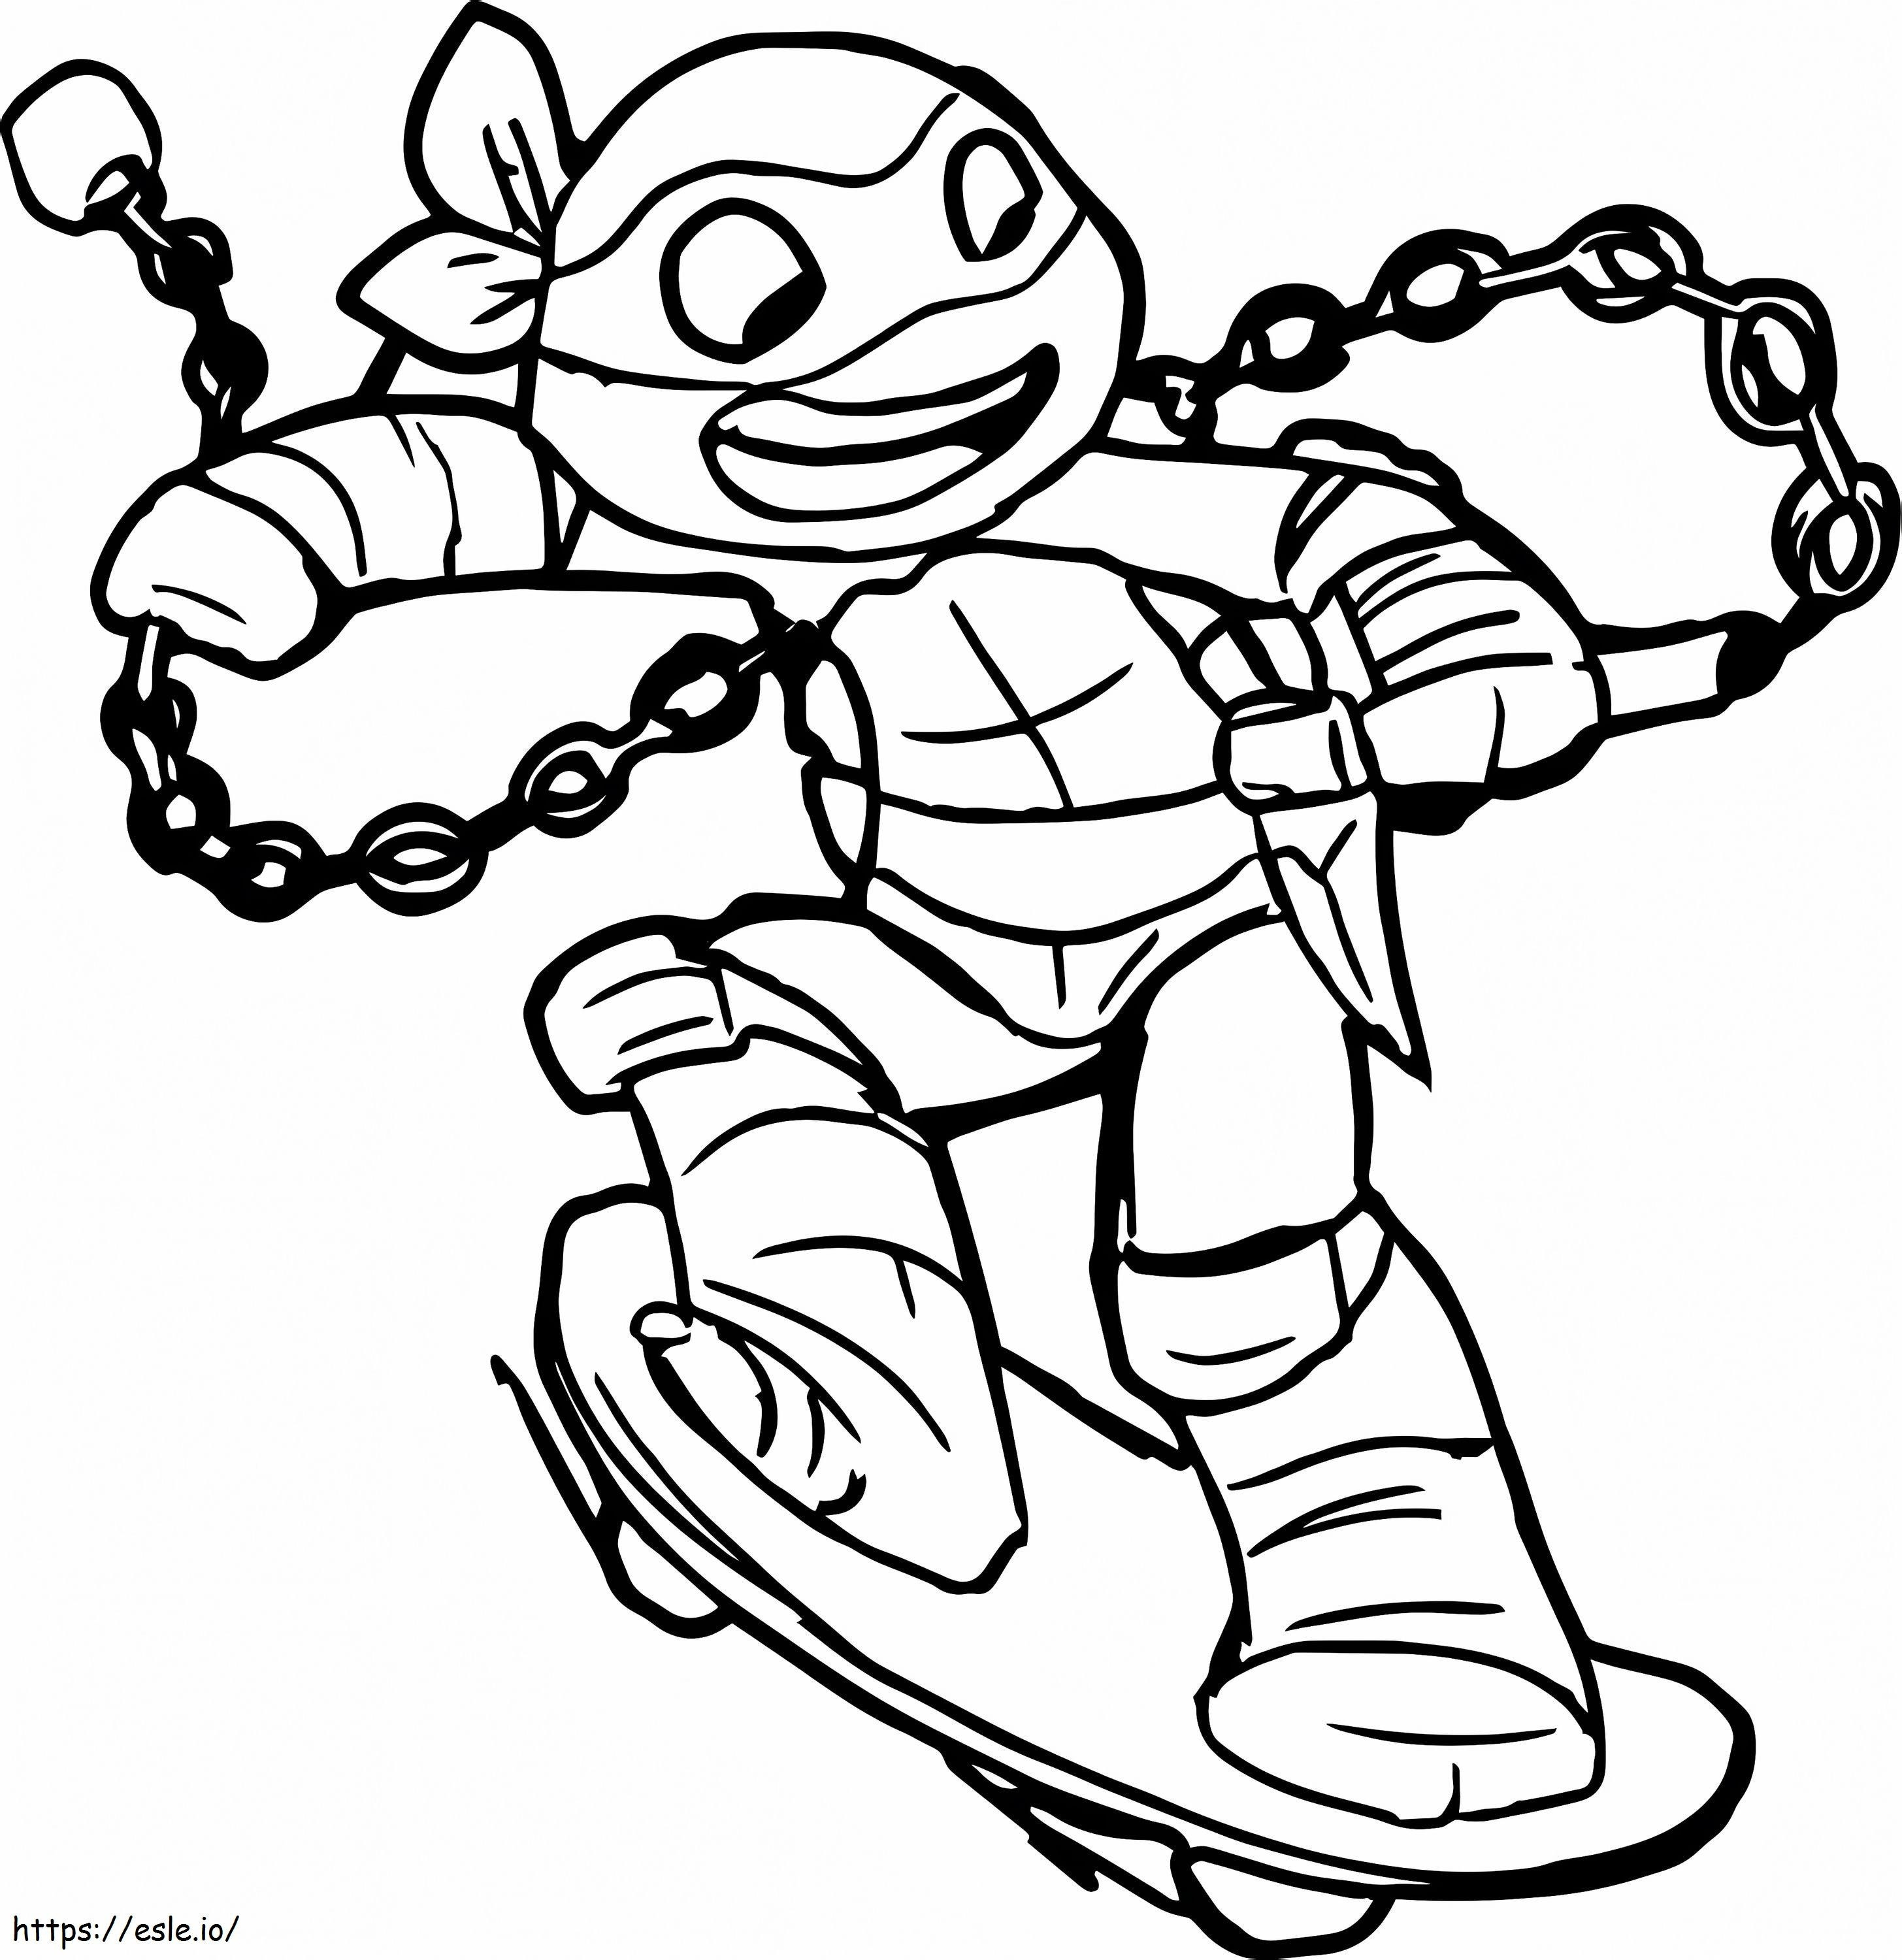 1532140232 Ninja Turtle Skateboarding A4 ausmalbilder